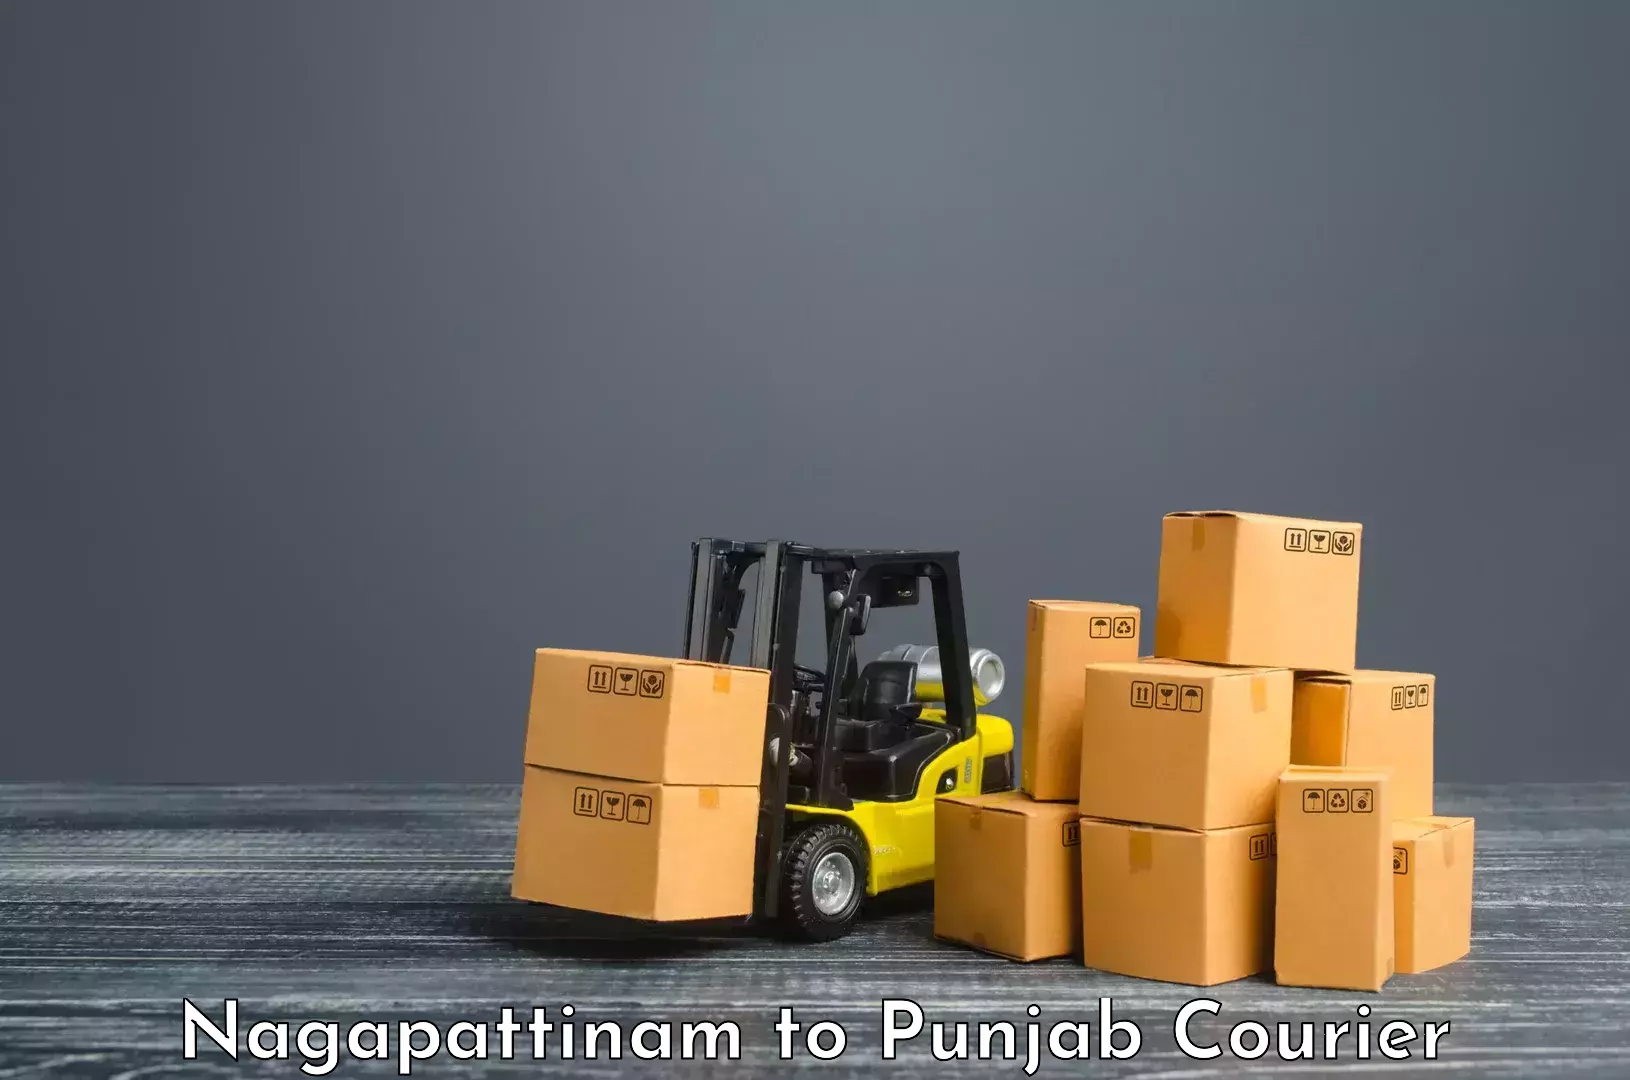 Specialized shipment handling Nagapattinam to Punjab